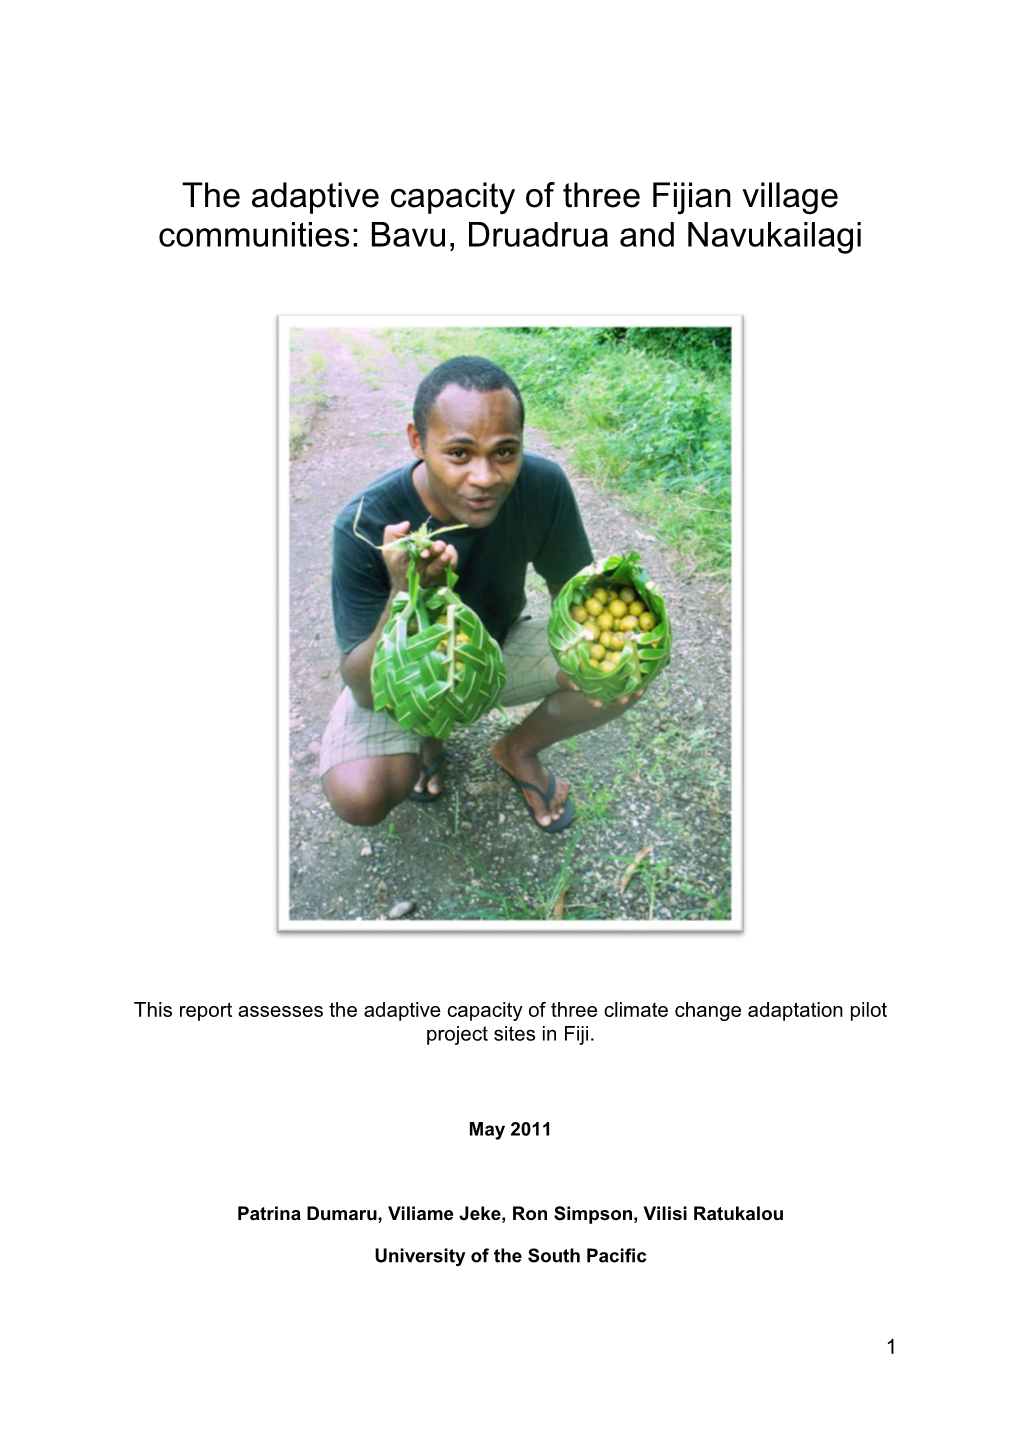 The Adaptive Capacity of Three Fijian Village Communities: Bavu, Druadrua and Navukailagi